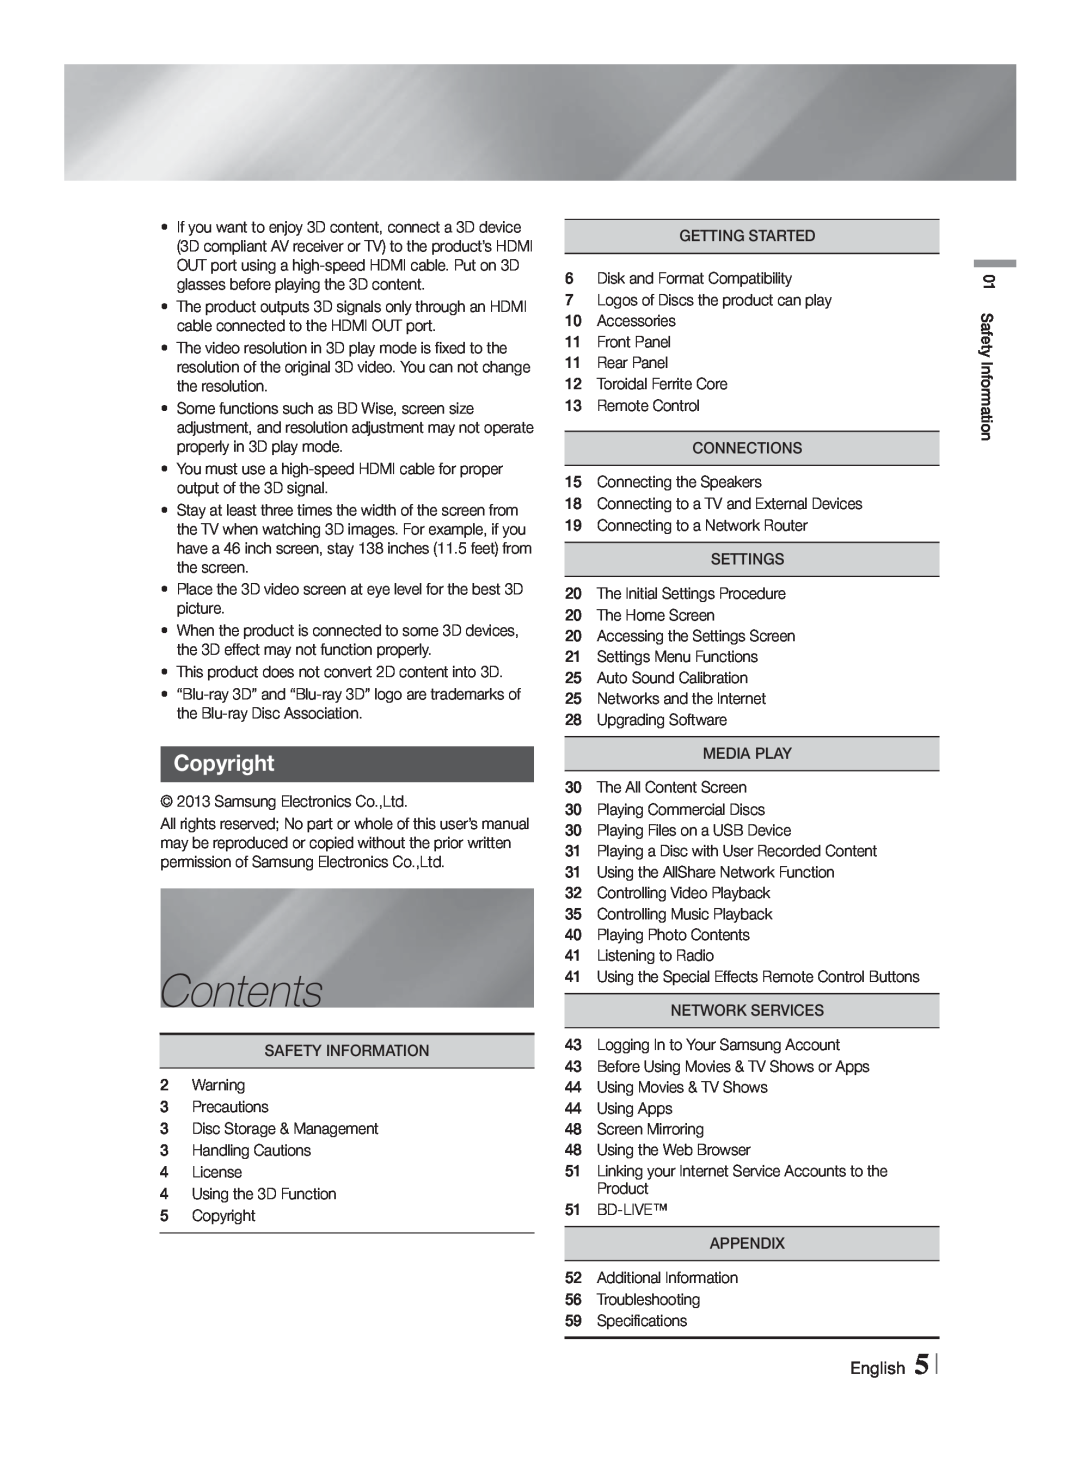 Samsung HT-F9730W/ZA user manual Contents, Copyright, English 